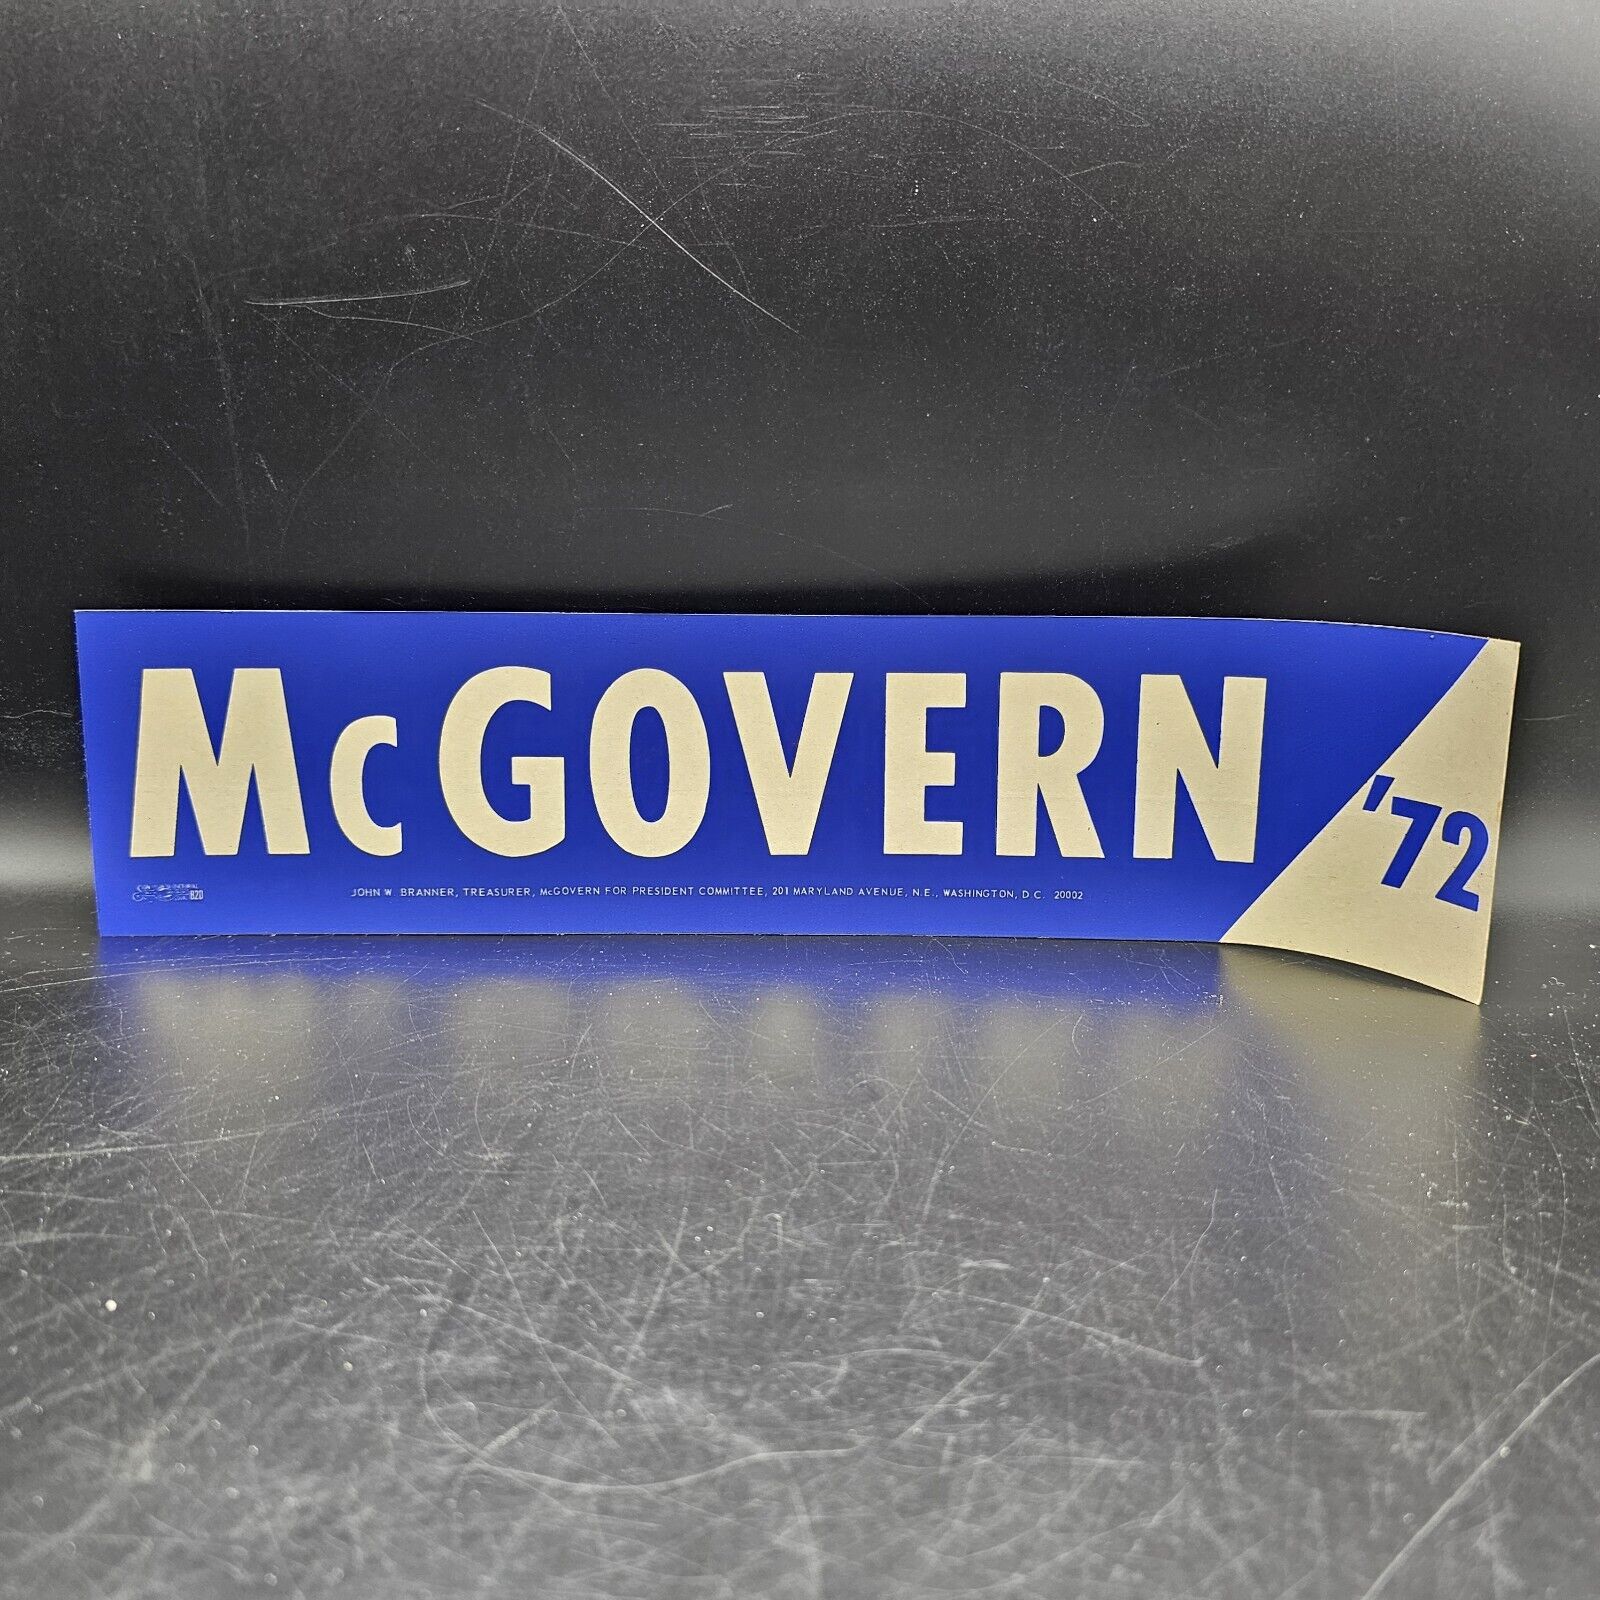 McGovern 72 Vintage Political Bumper Sticker